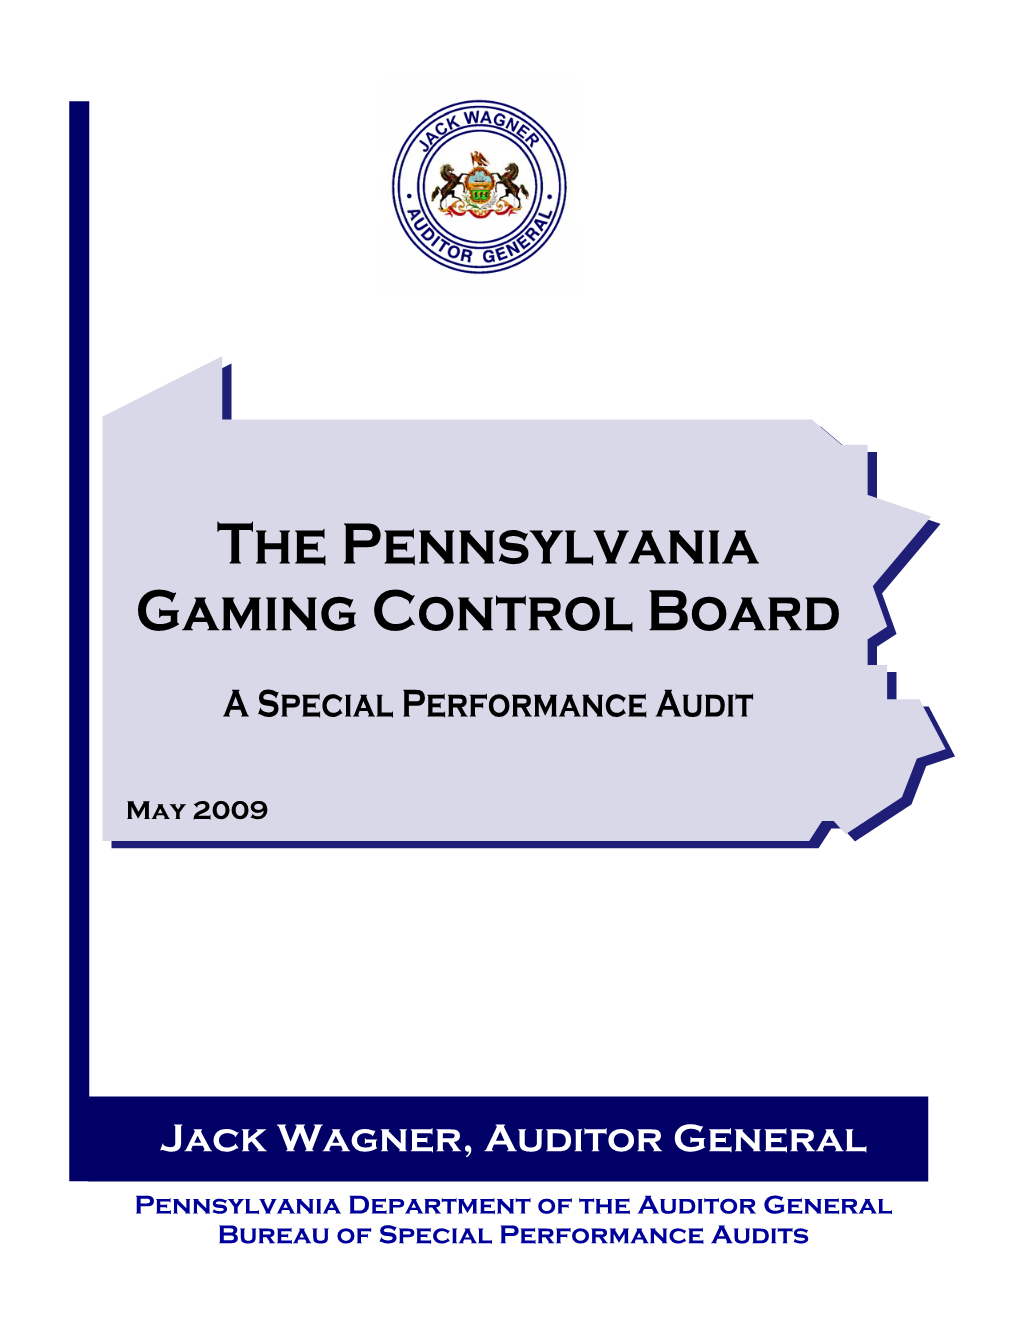 The Pennsylvania Gaming Control Board